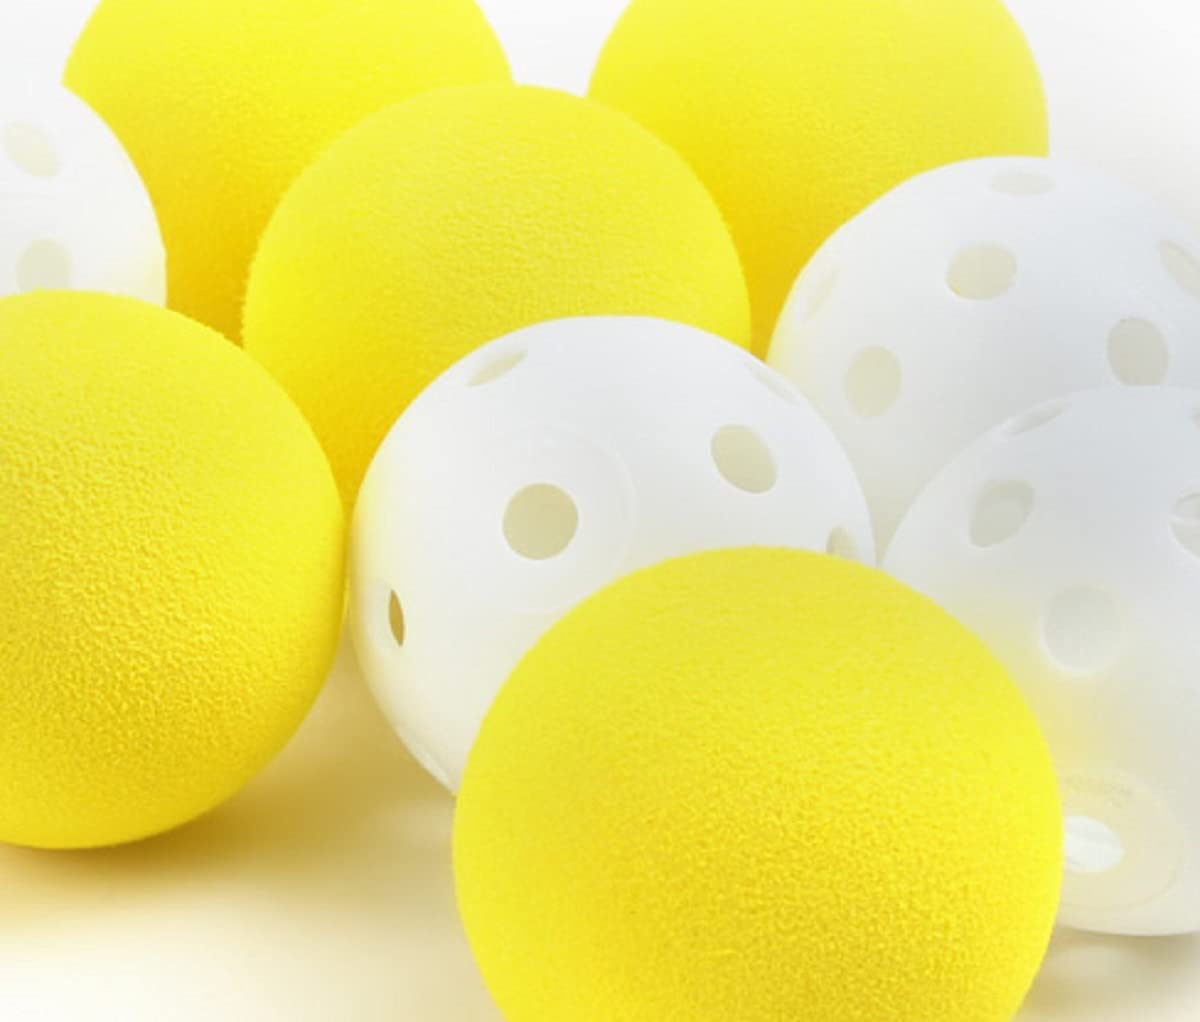 Orlimar Air-Flow and High-Density Golf Balls - Open Box